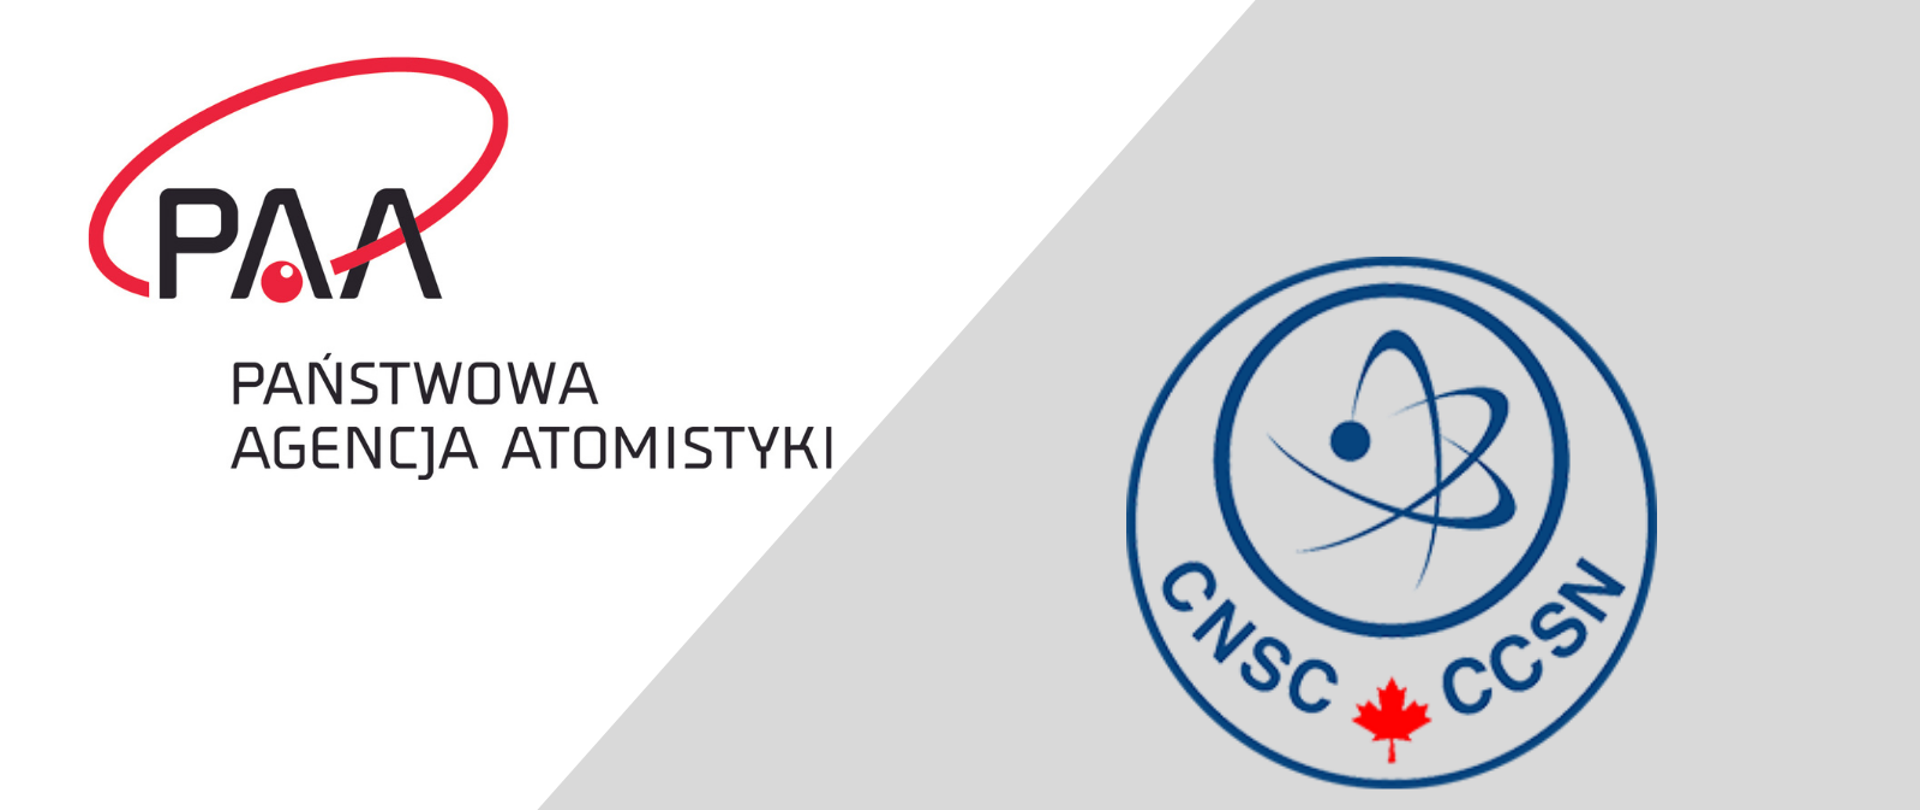 Logotypy PAA i CNSC